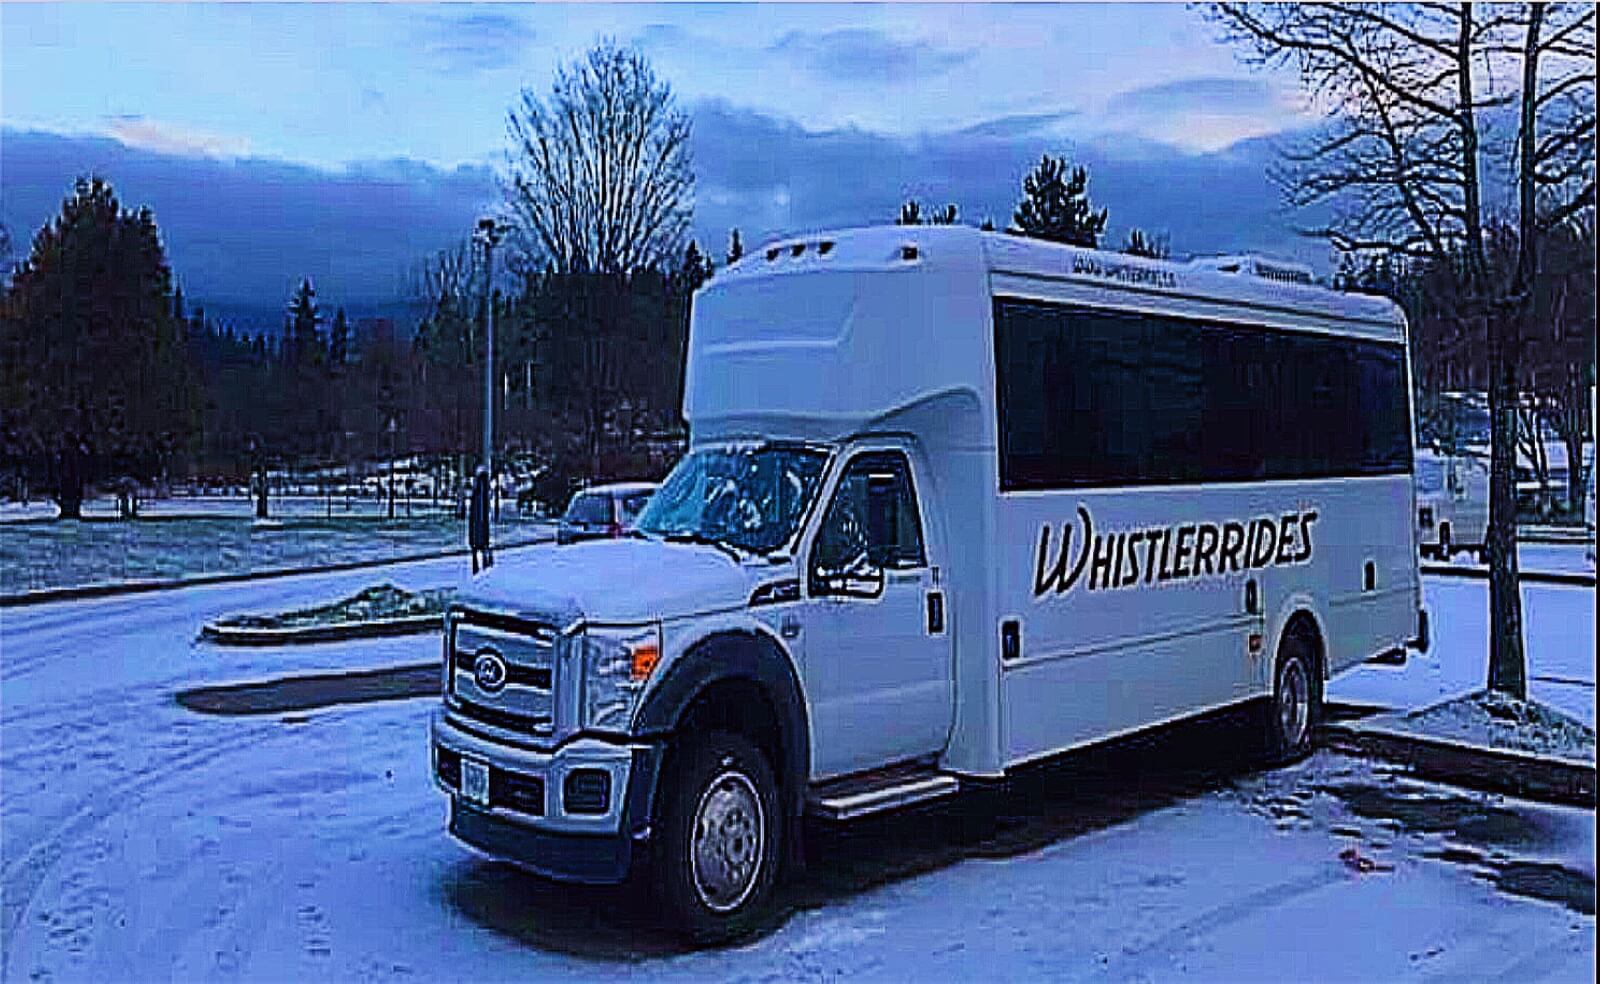 The Whistler Rides bus in Whistler